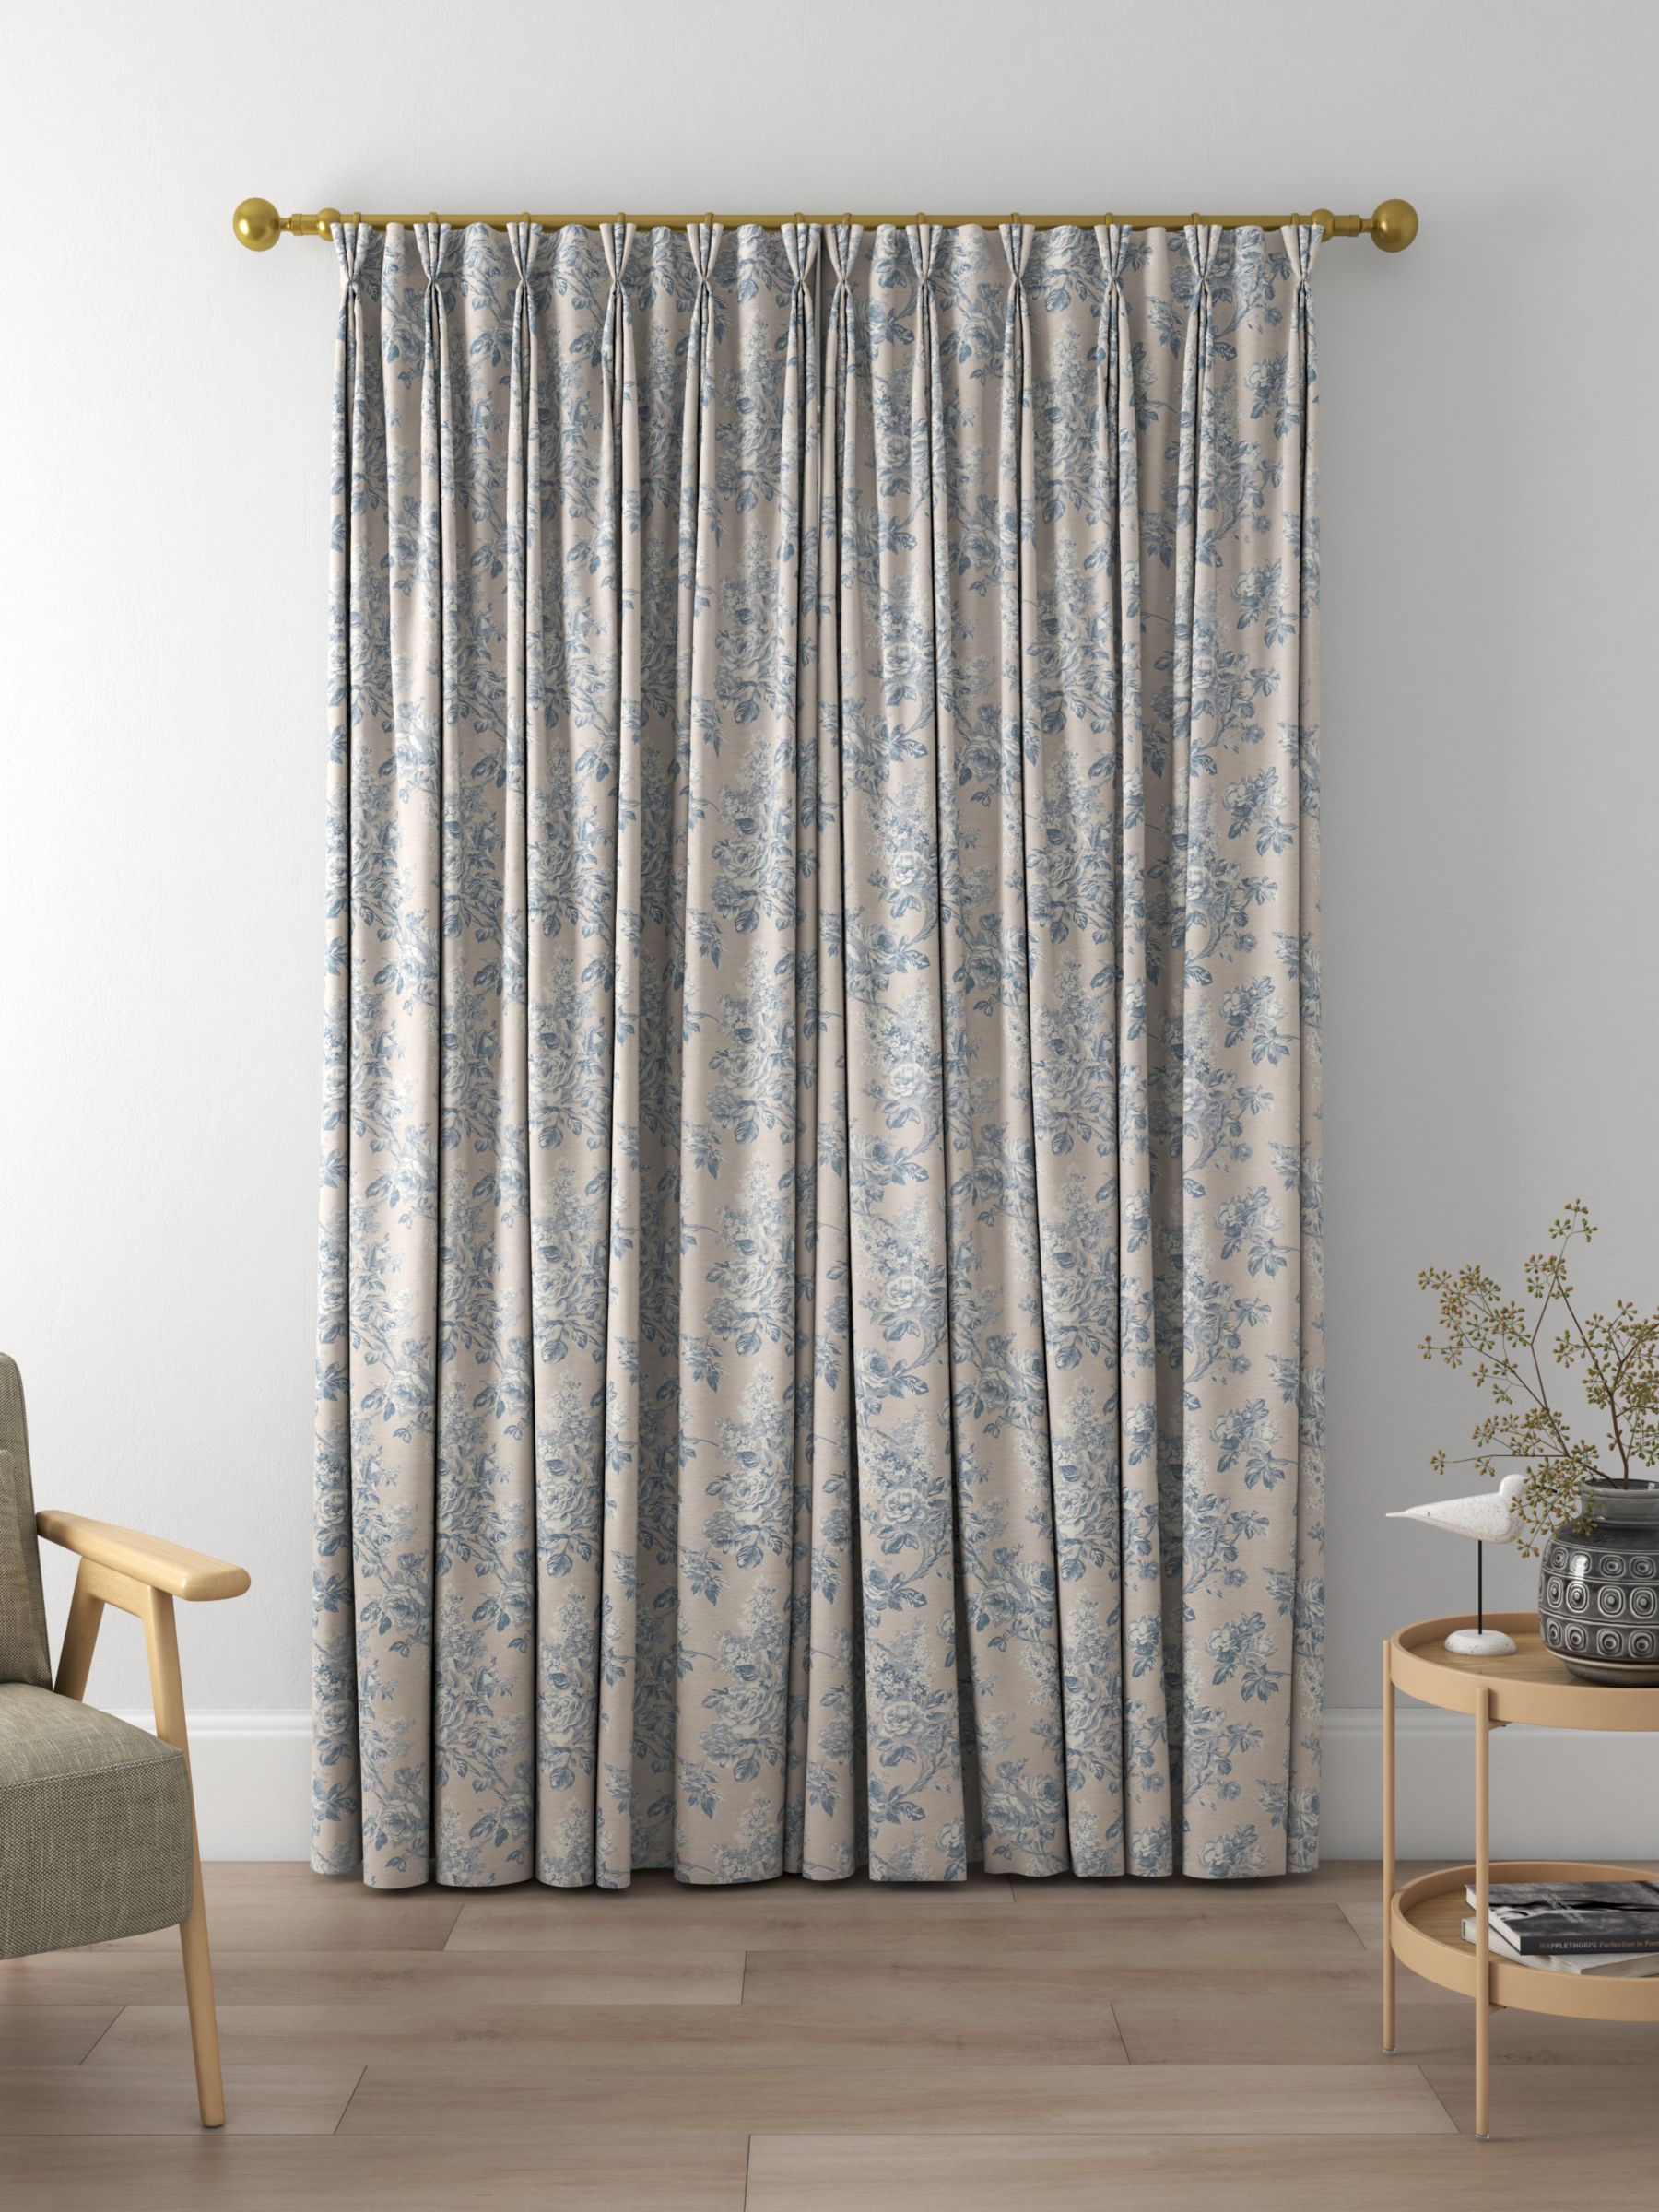 Sanderson Sorilla Damask Made to Measure Curtains, Delft/Linen